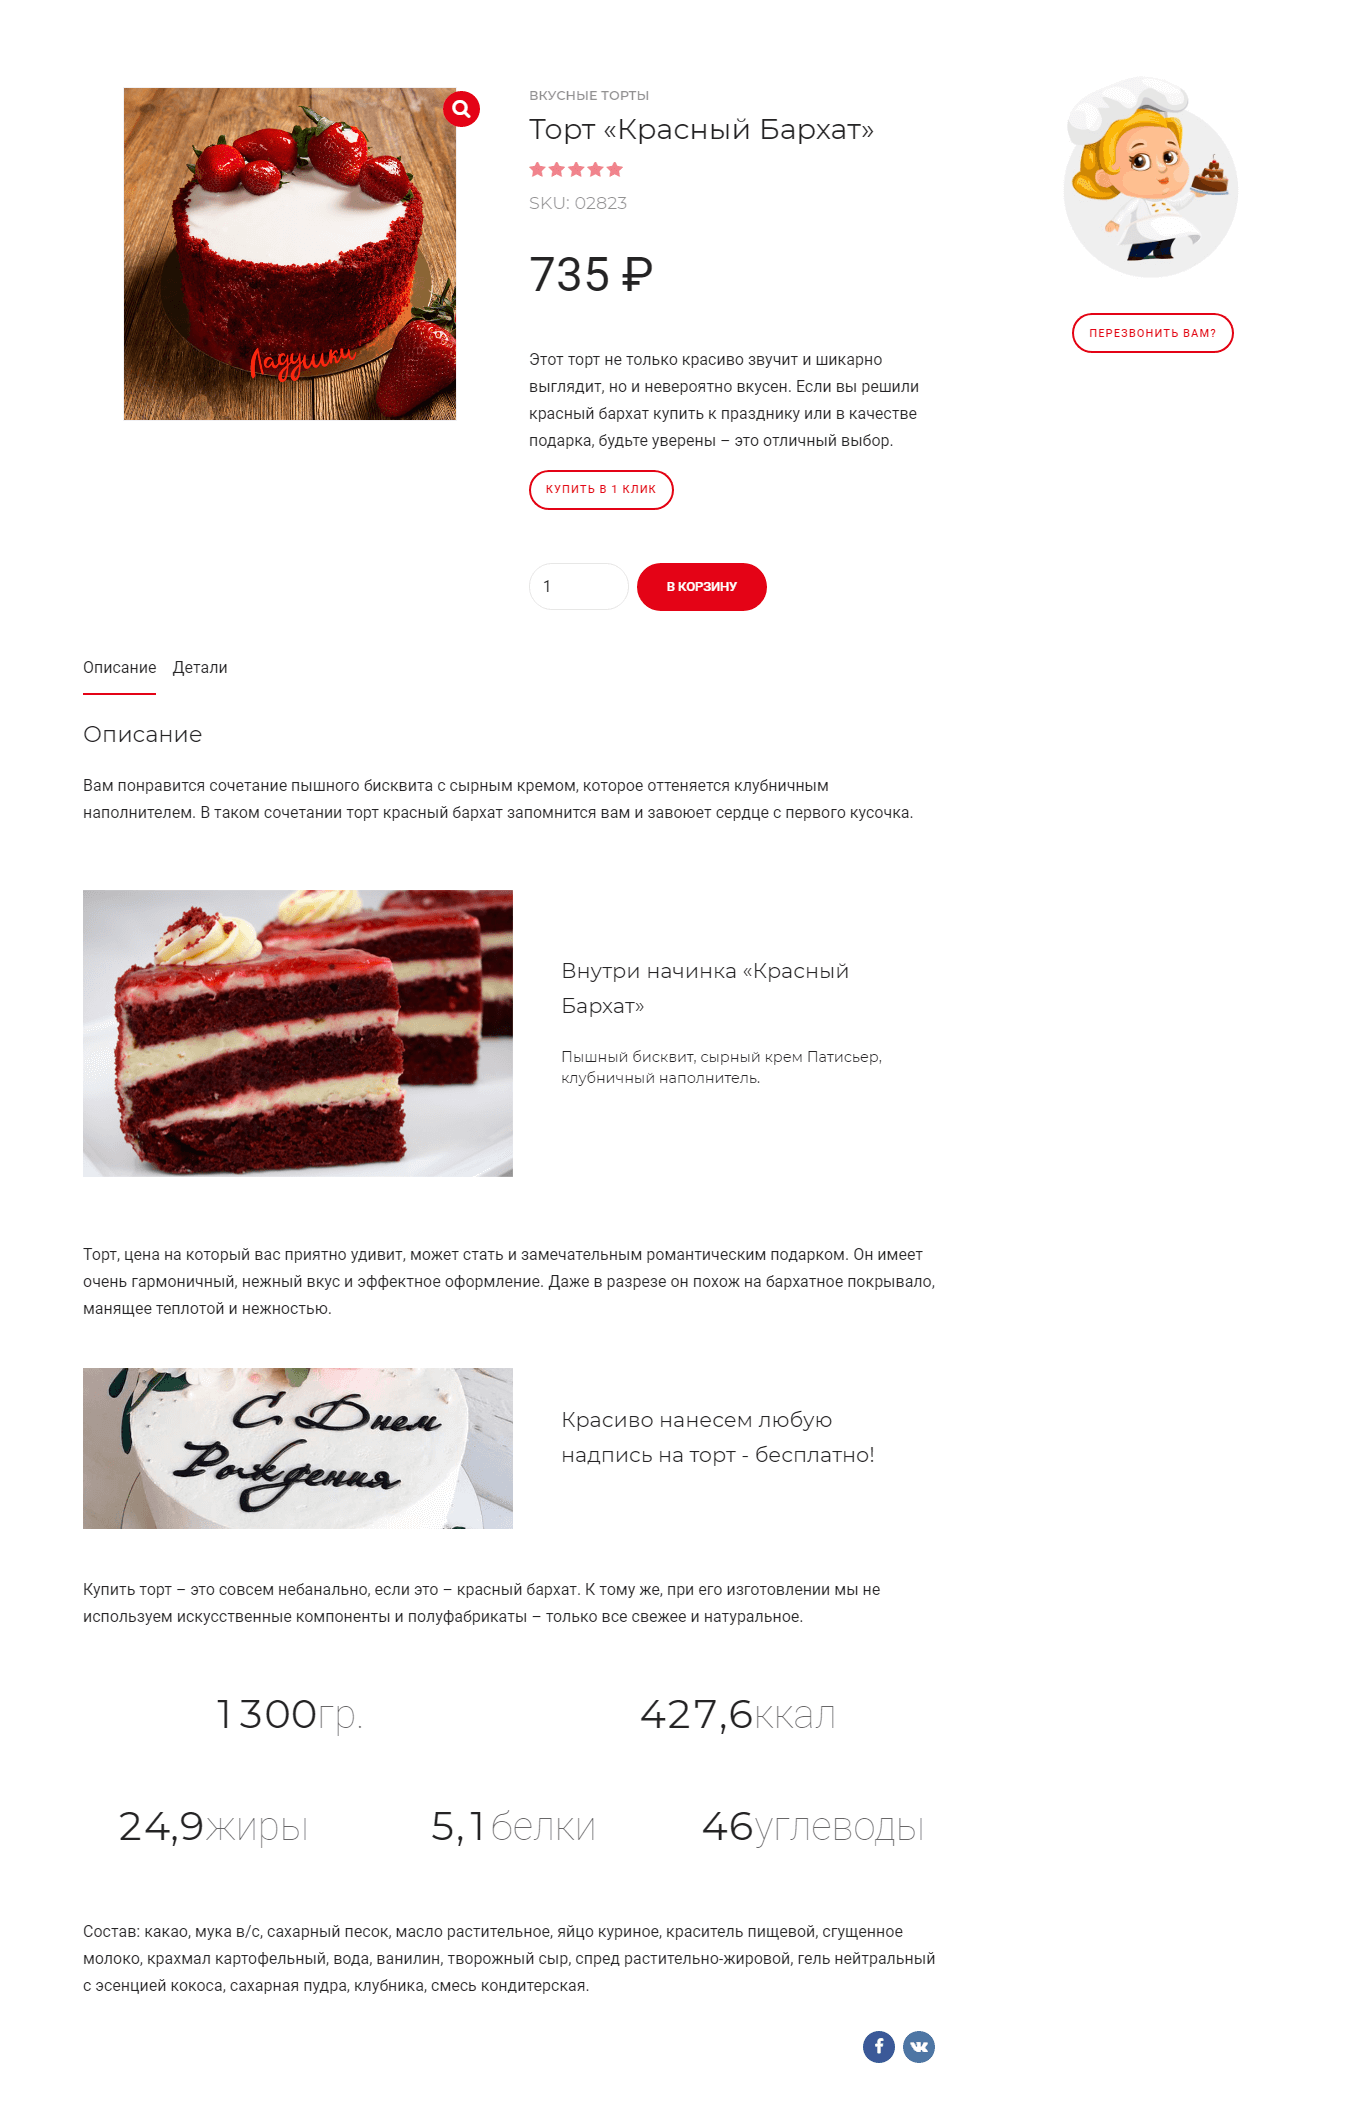 Пример текста карточки товара – торт